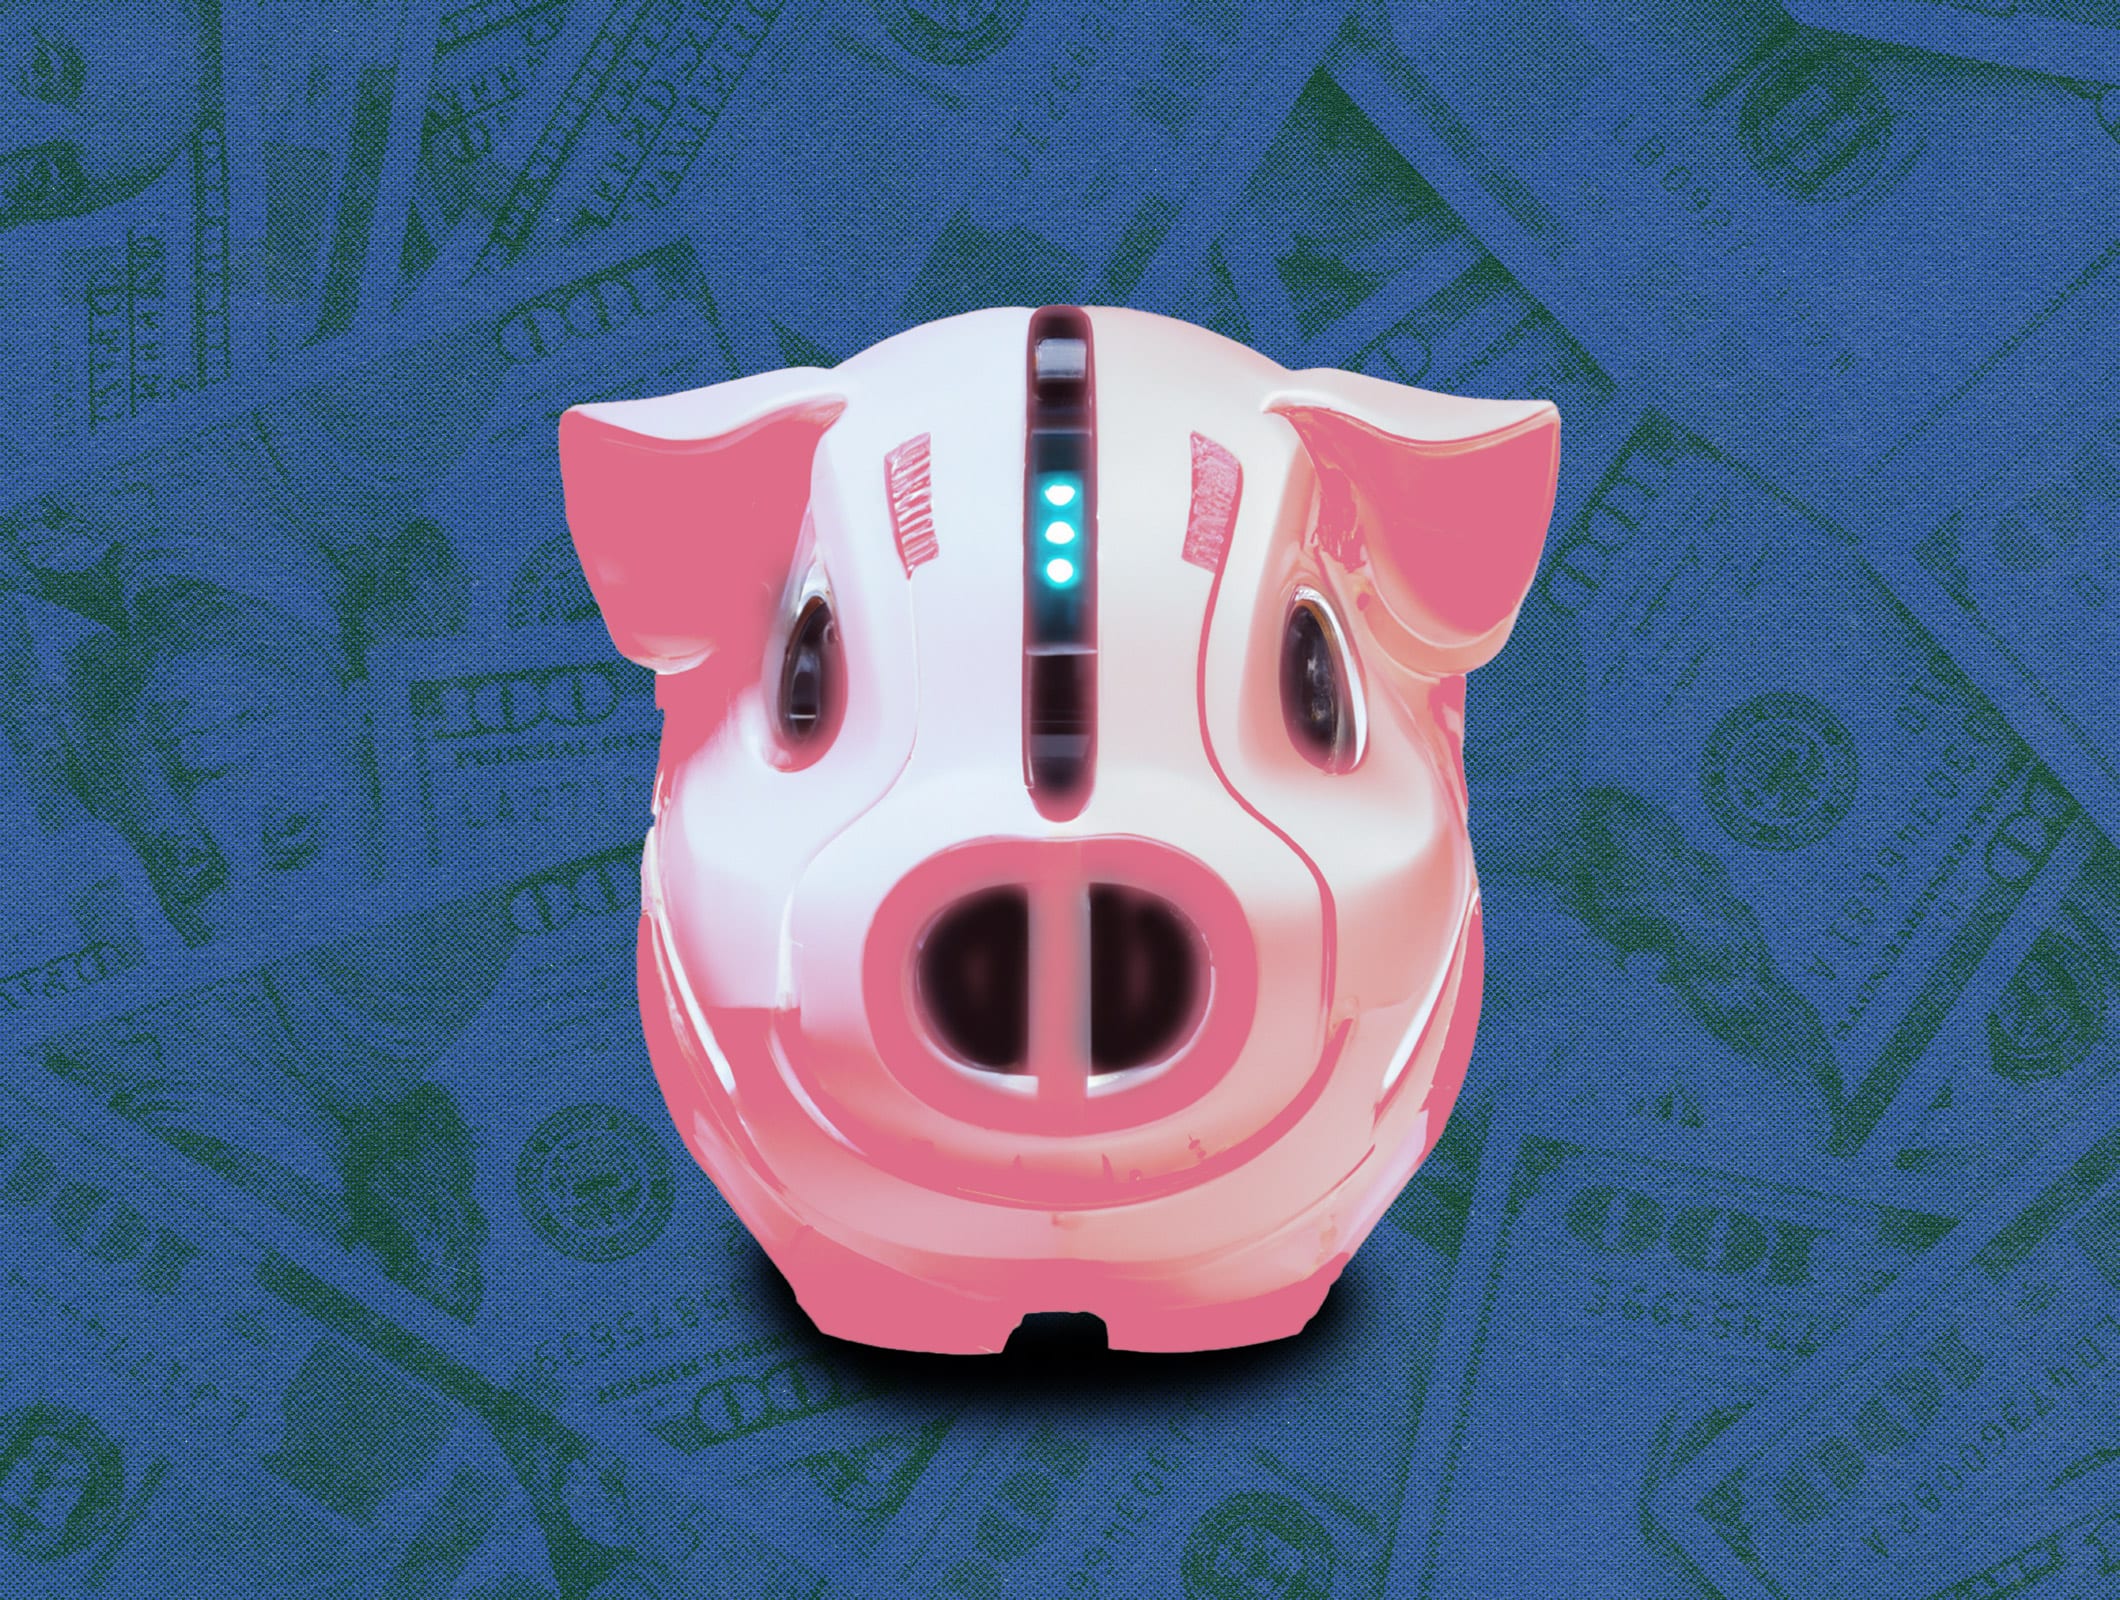 A futuristic, AI-powered piggy bank.